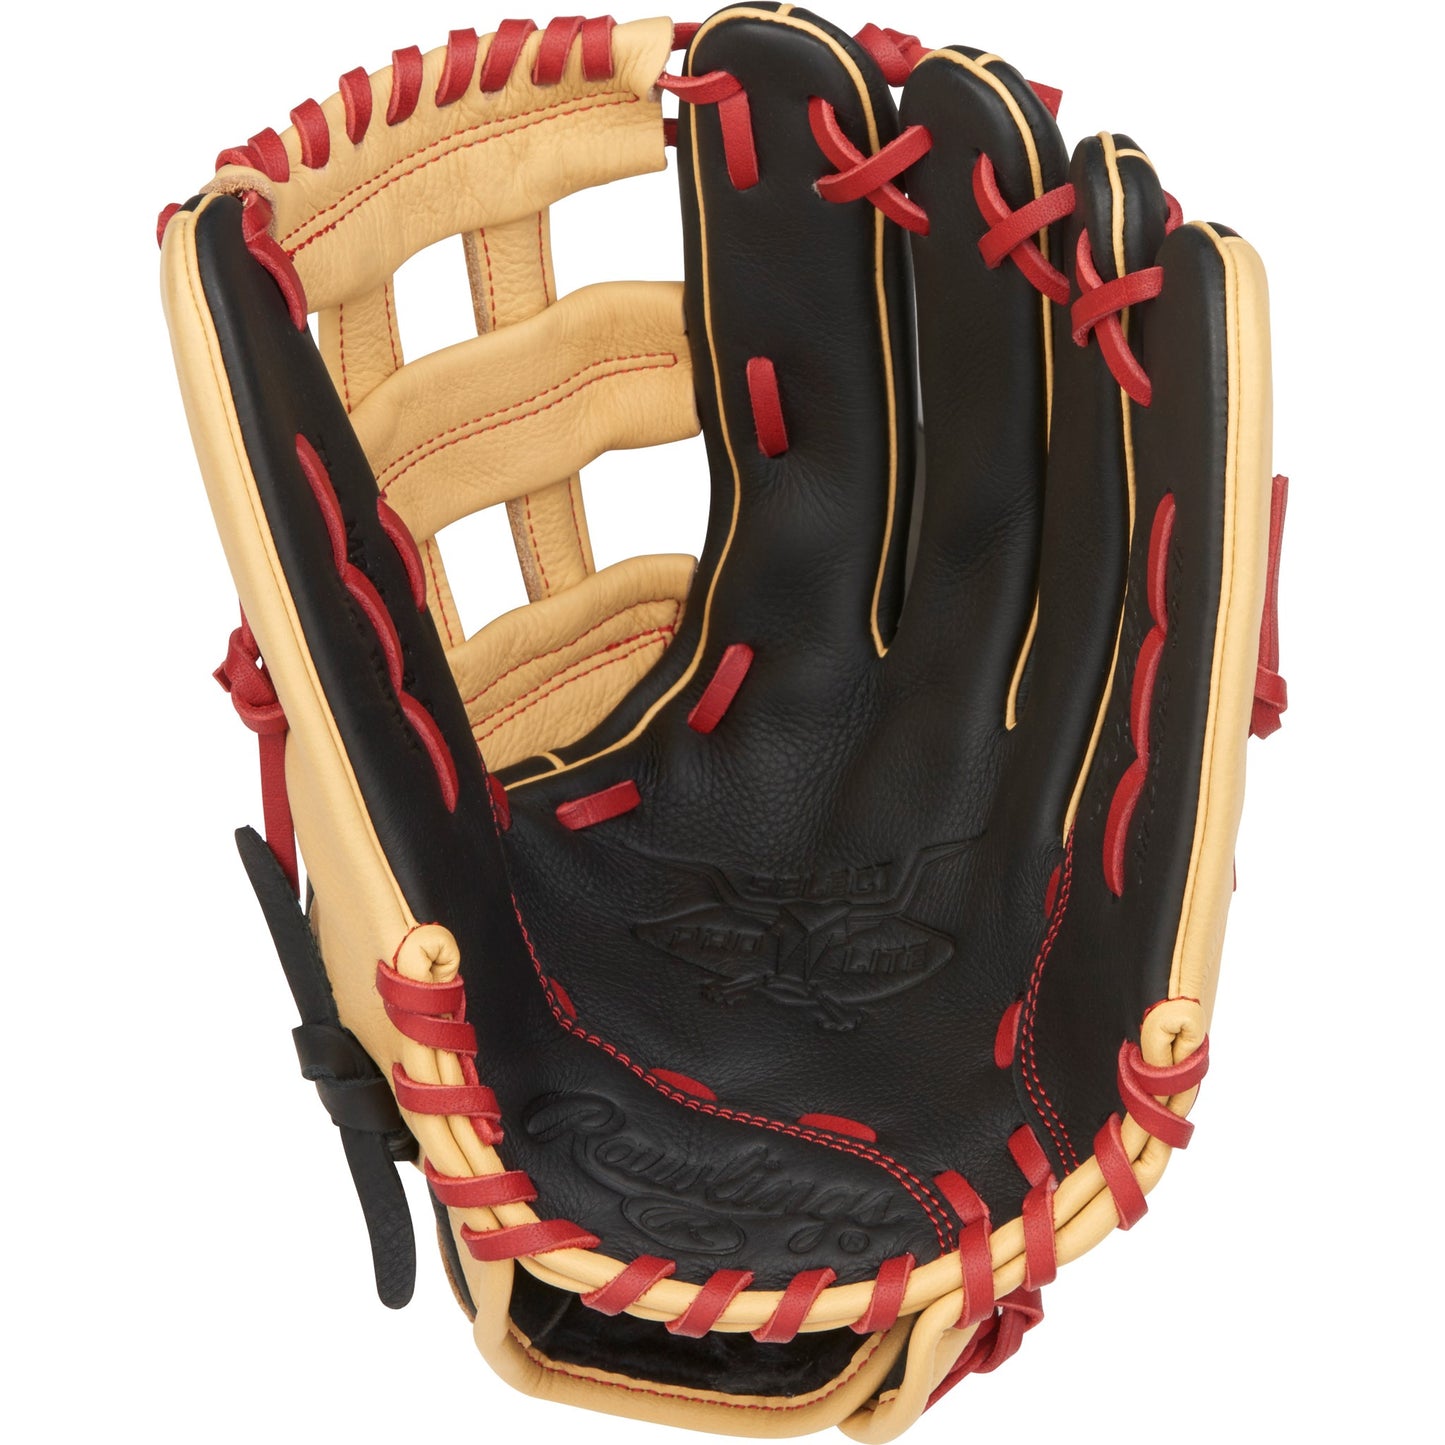 Rawlings (SPL120BH) Select Pro Lite Series 12" Baseball/Softball Glove